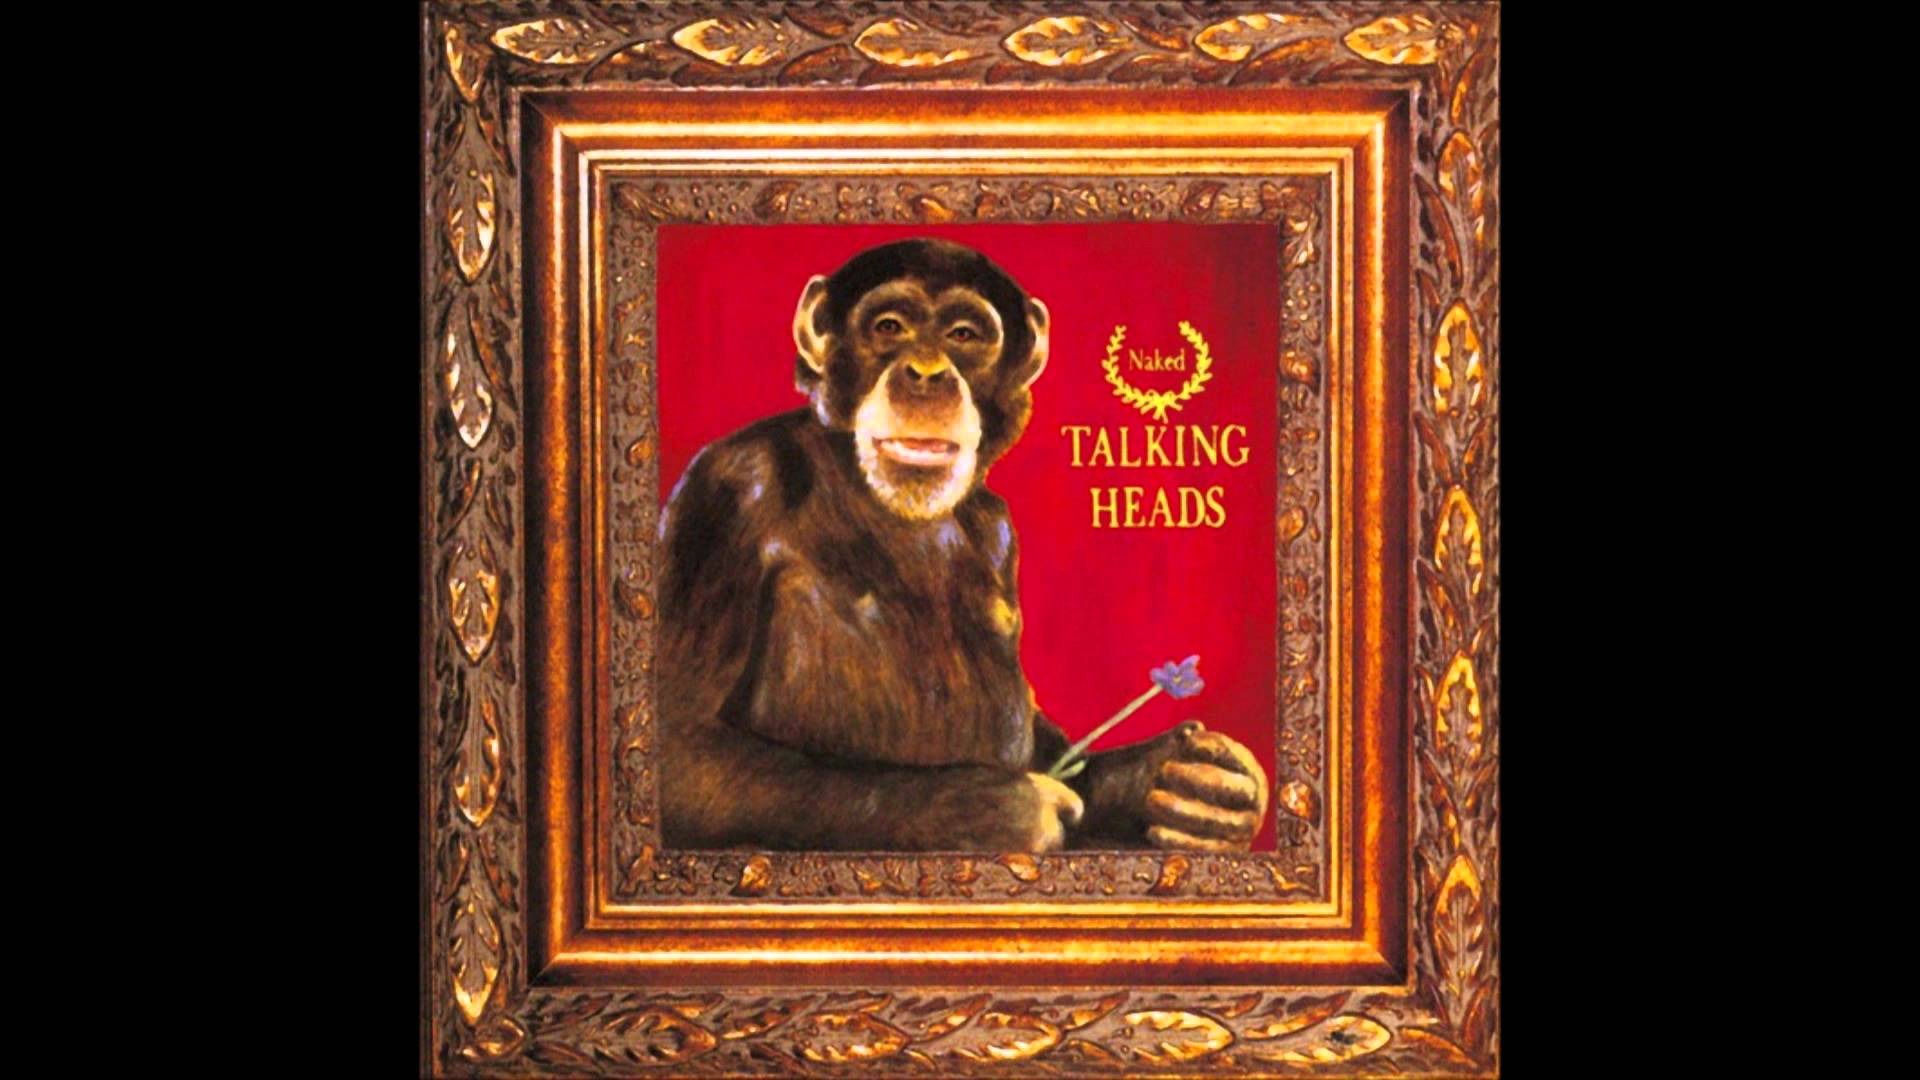 Talking Heads - Blind (HQ) - YouTube